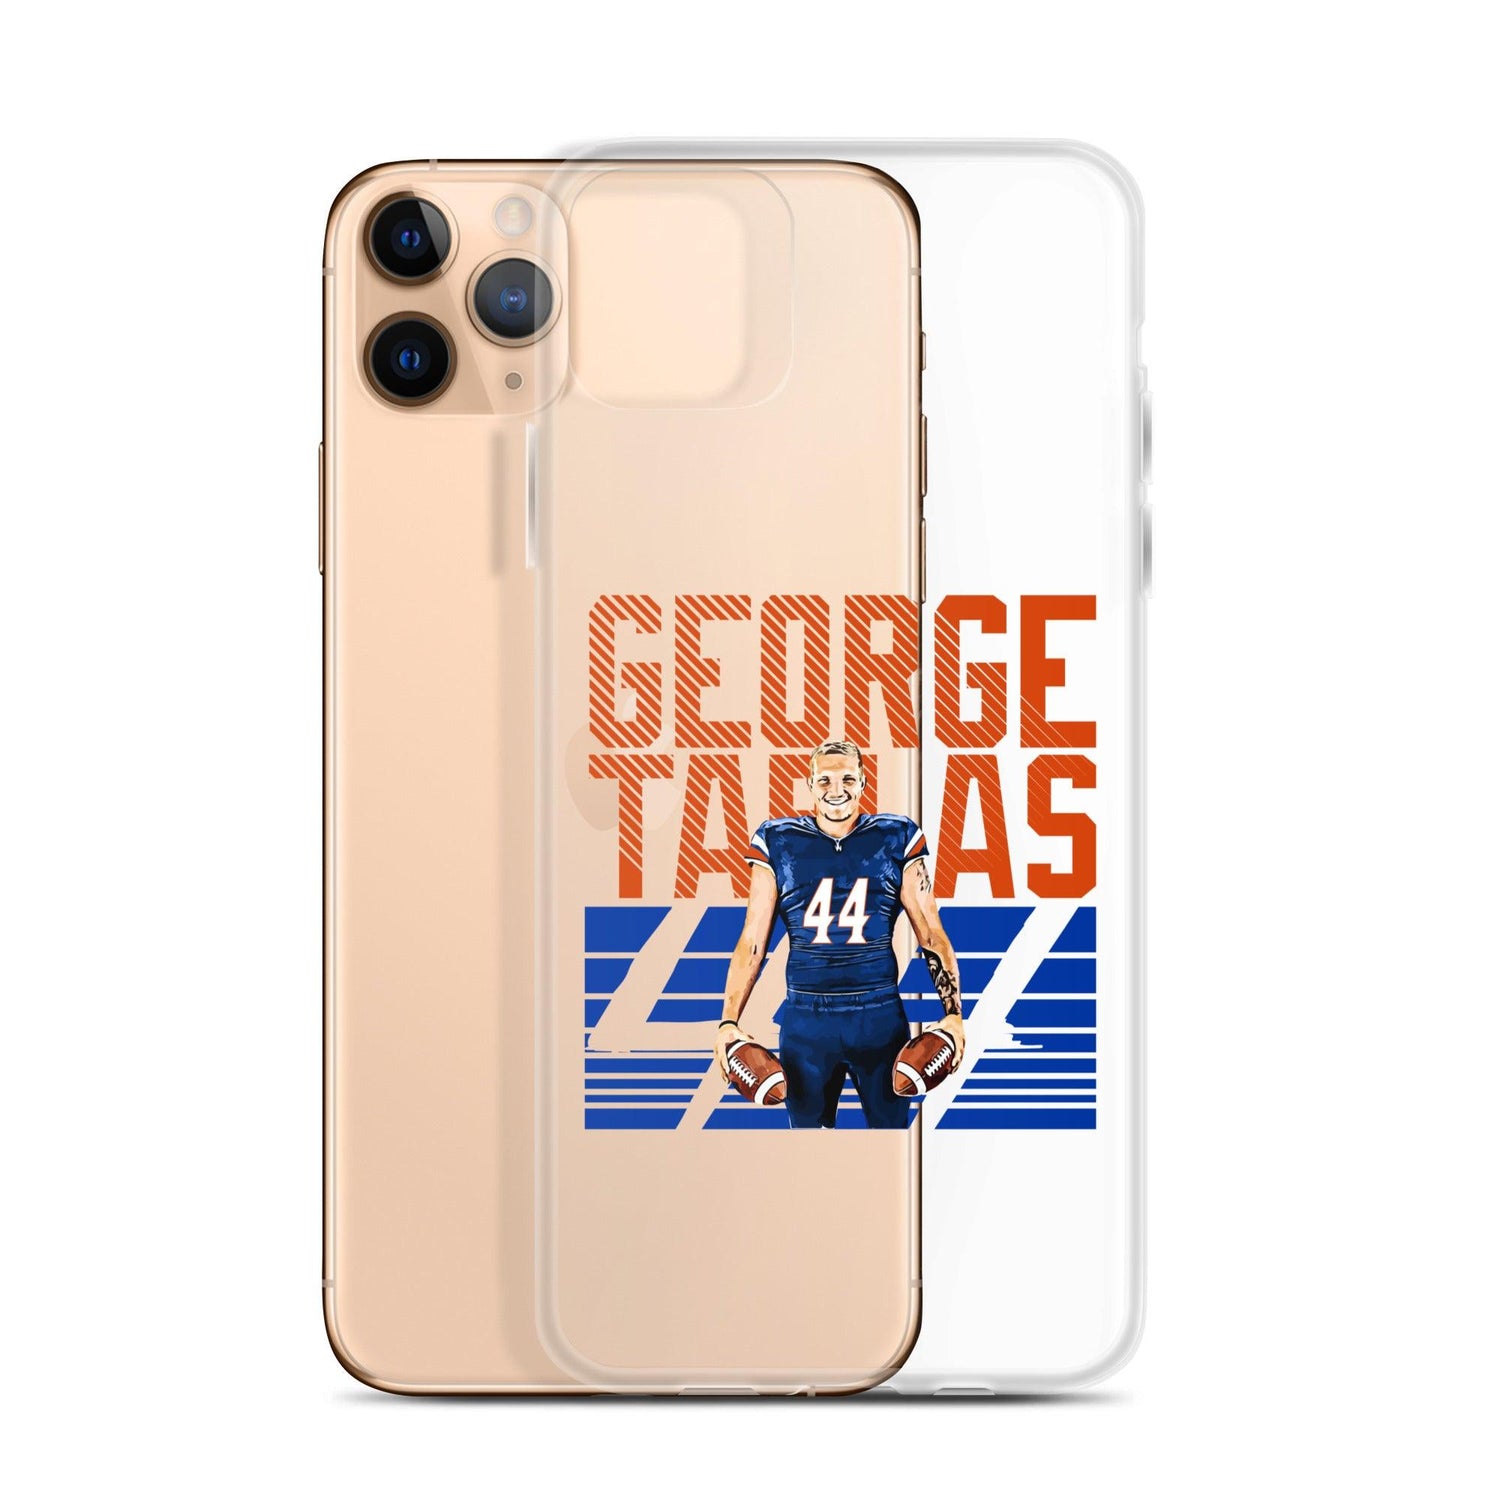 George Tarlas "Gameday" iPhone Case - Fan Arch